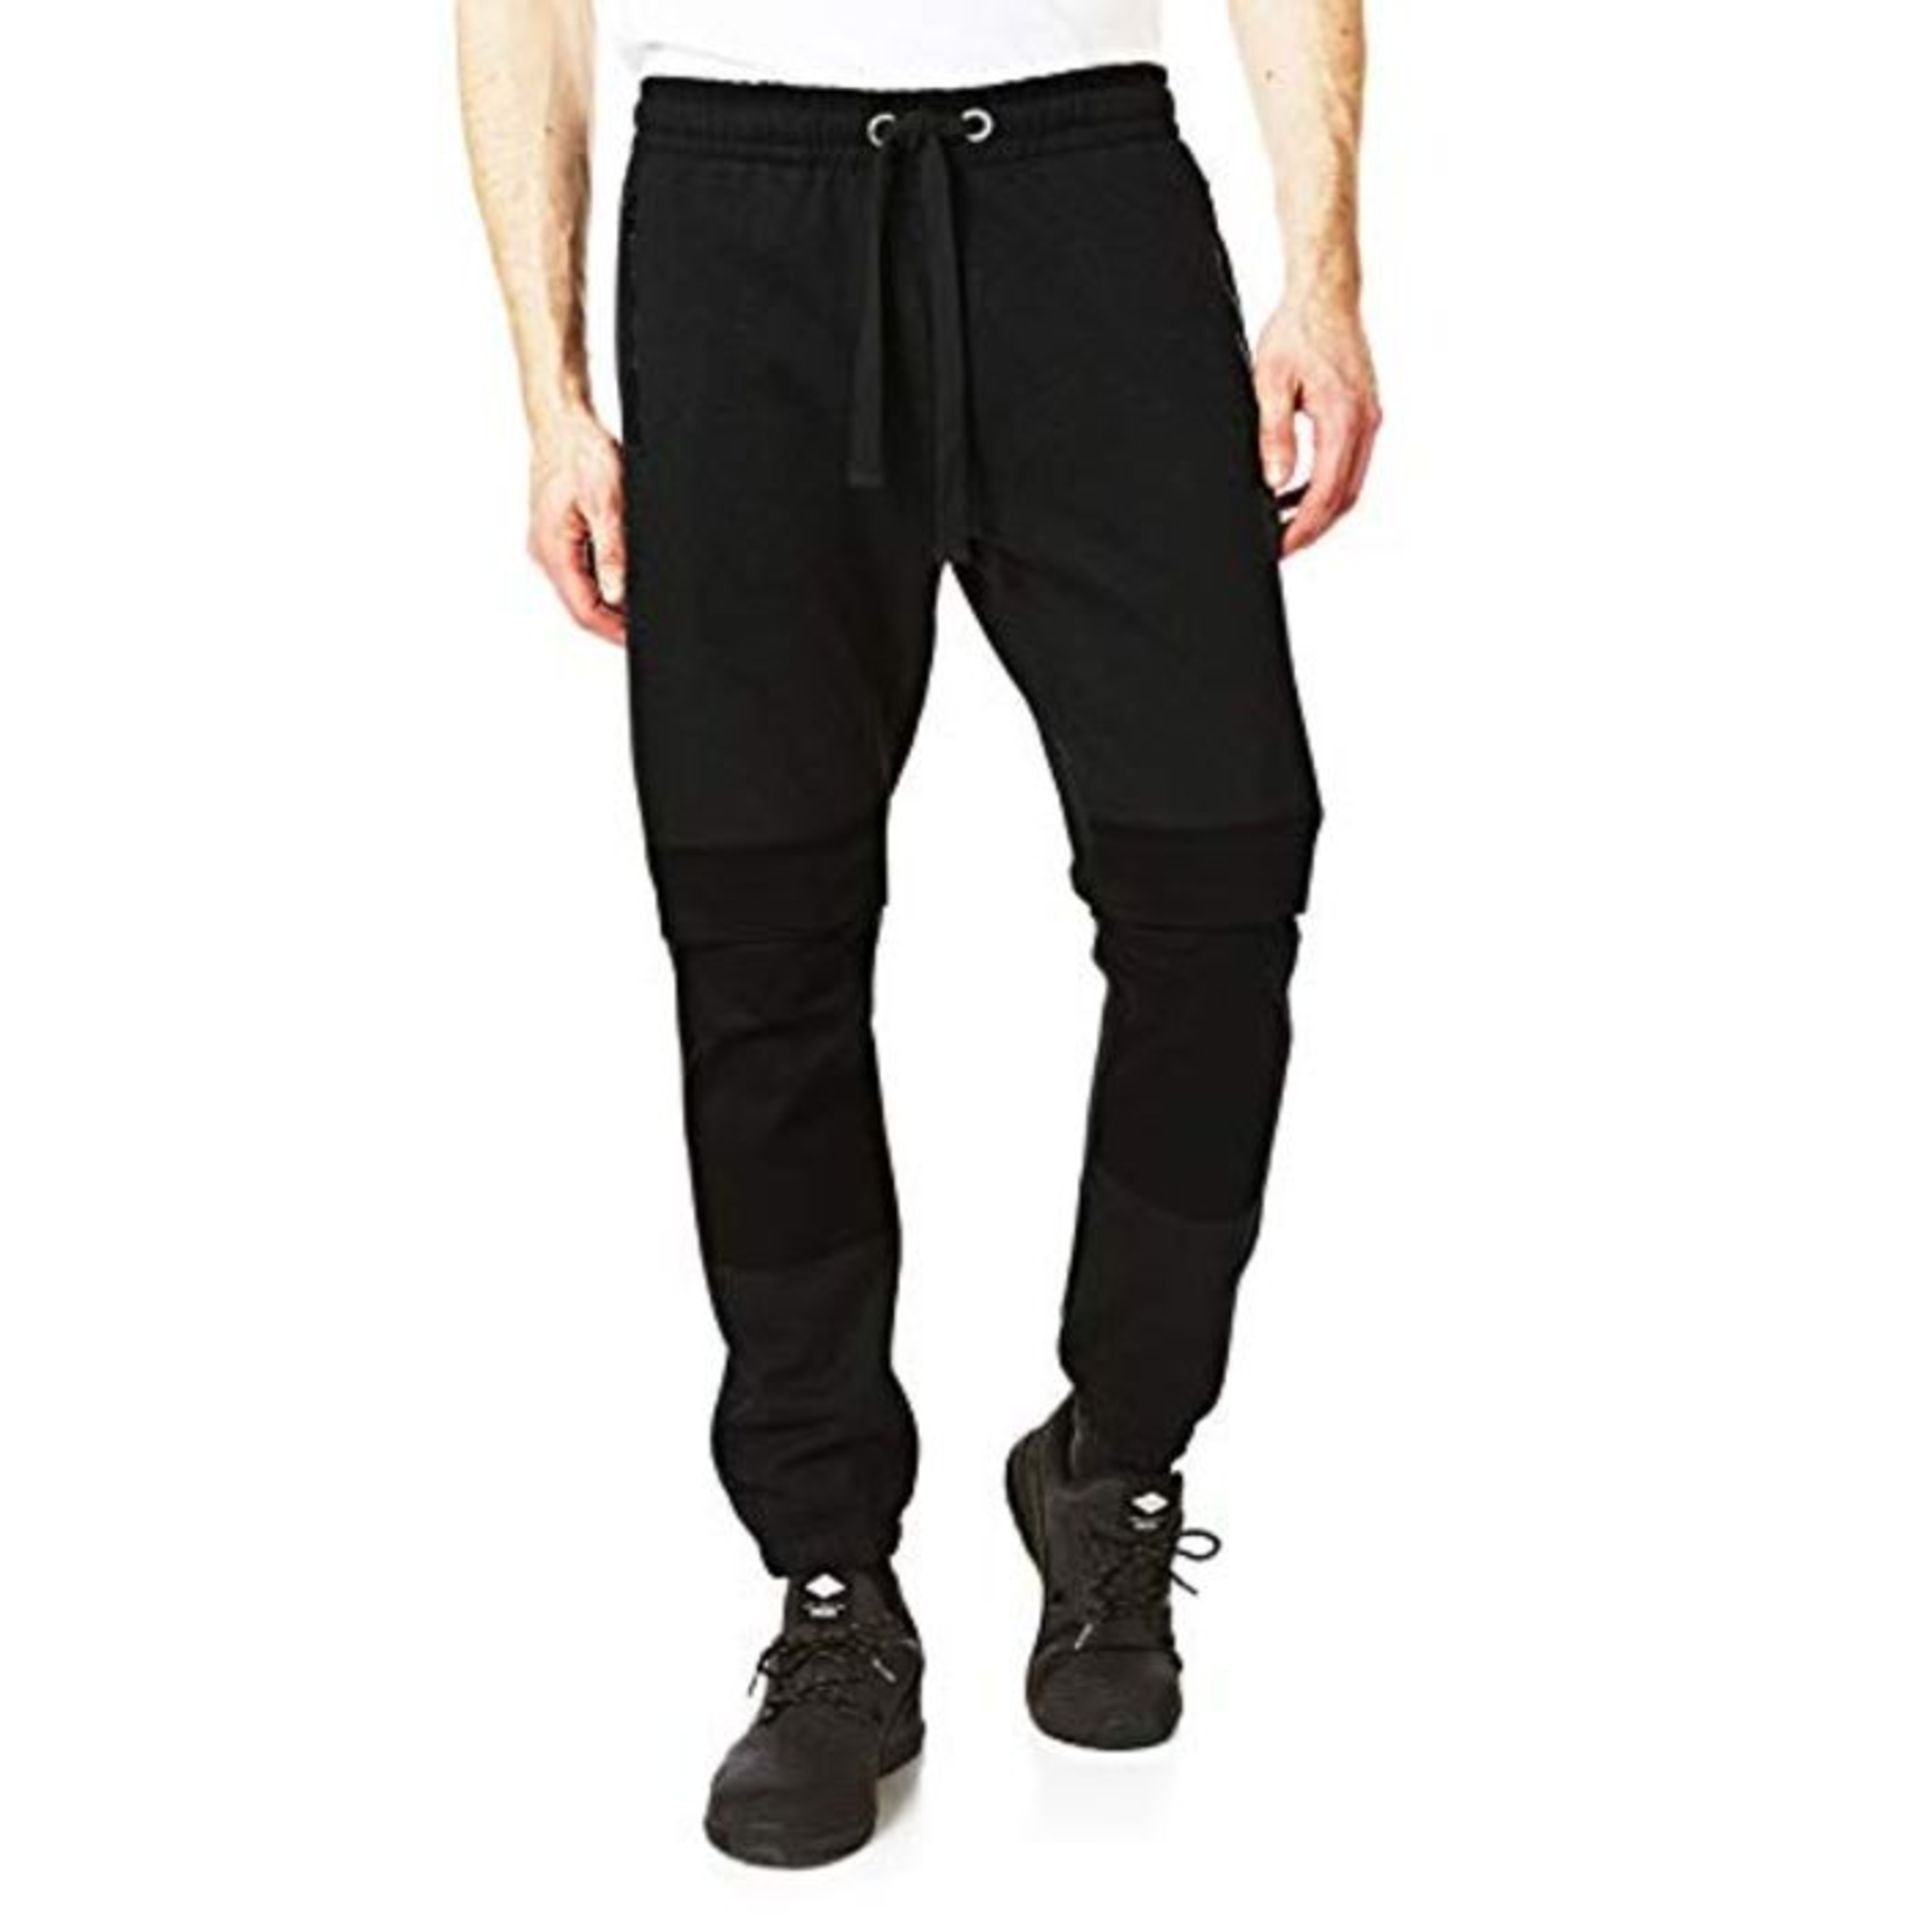 Iron Mountain IMPNT223 Mens Workwear Stretch Jog Pant Trouser, Black, M